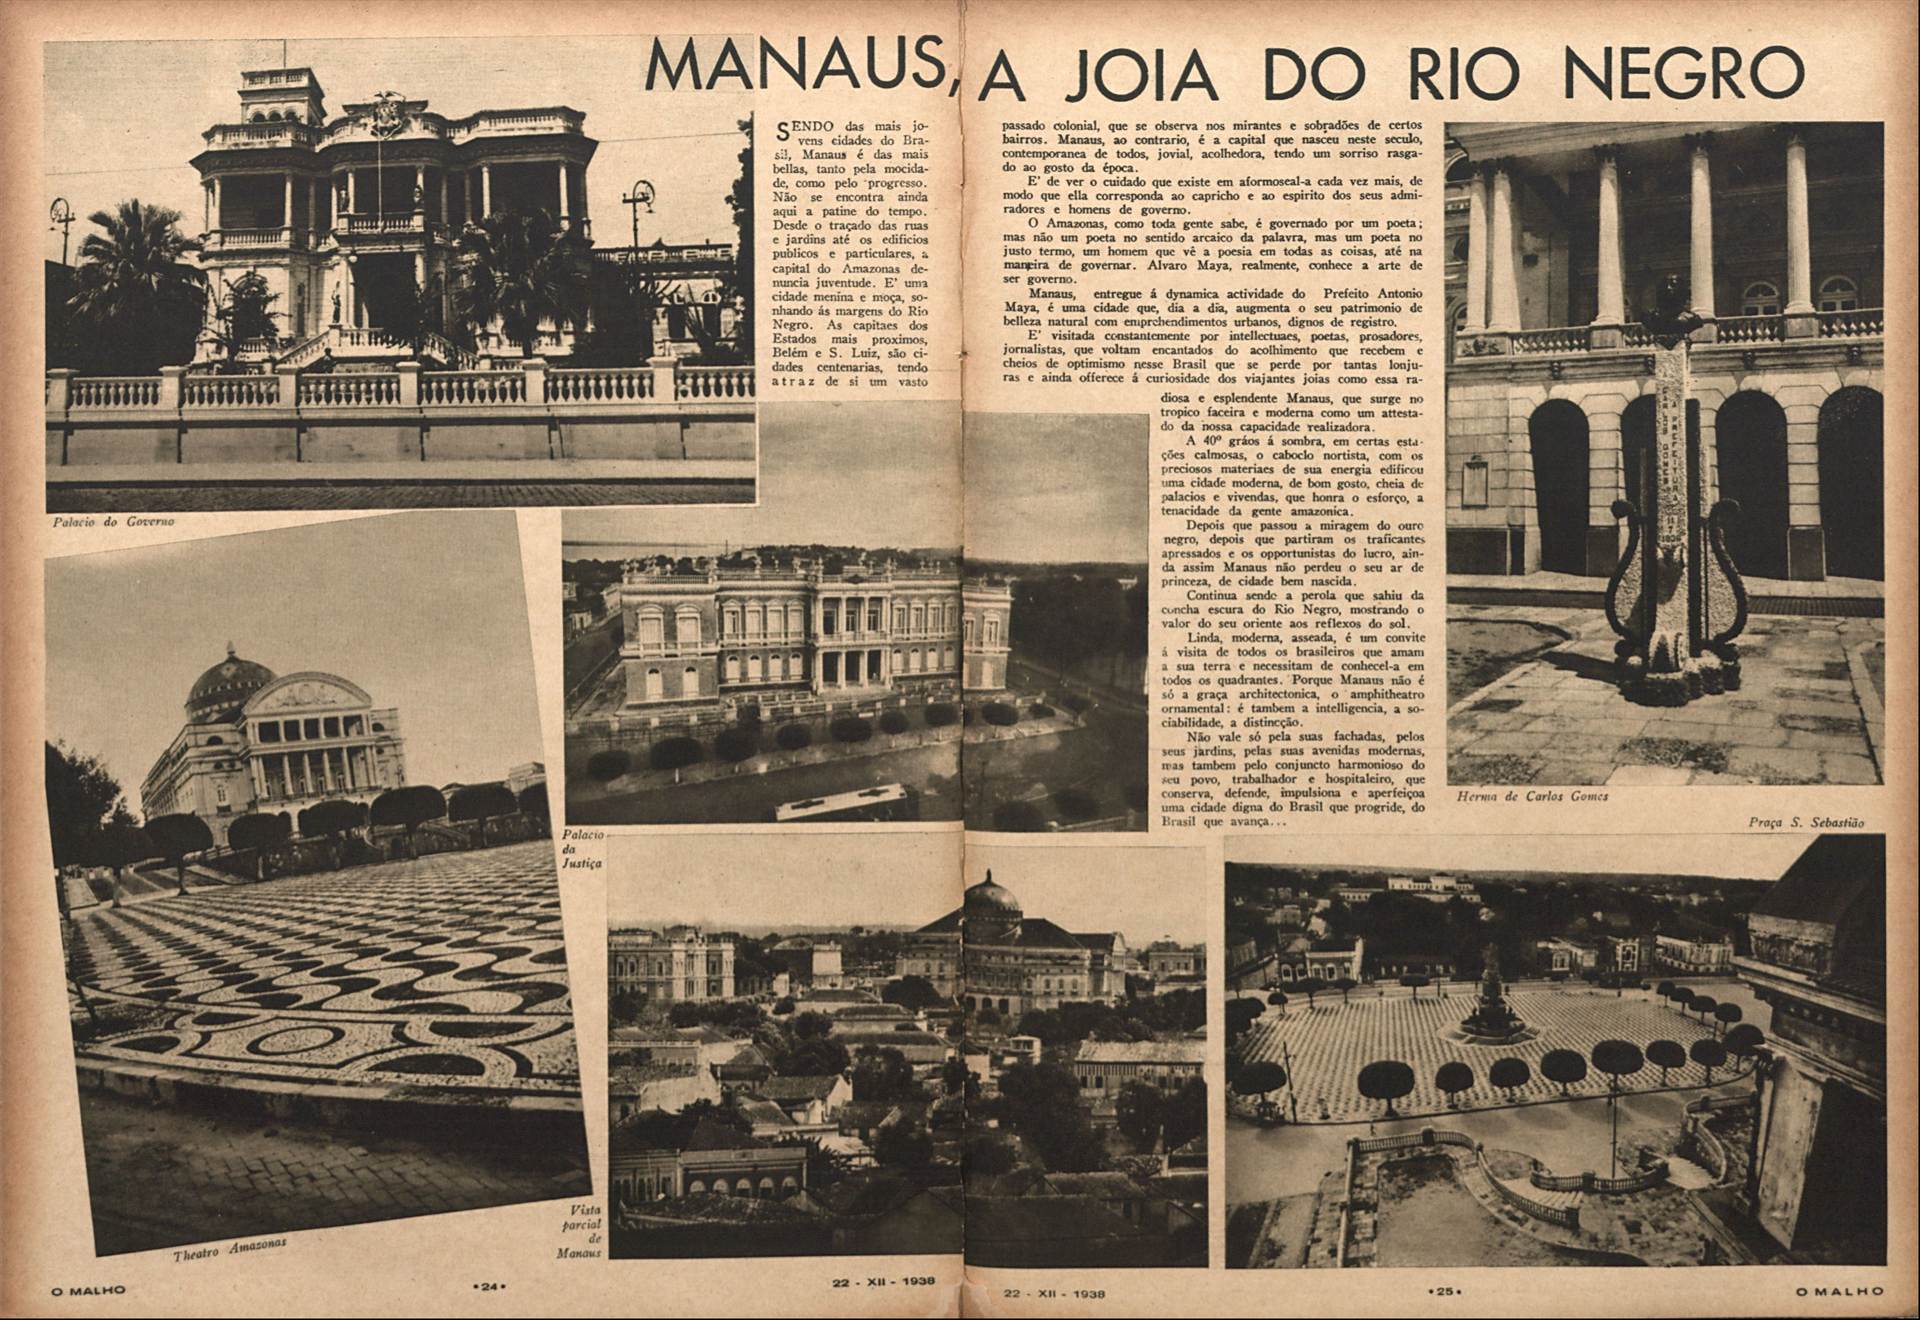 Manaus a joia do Rio Negro